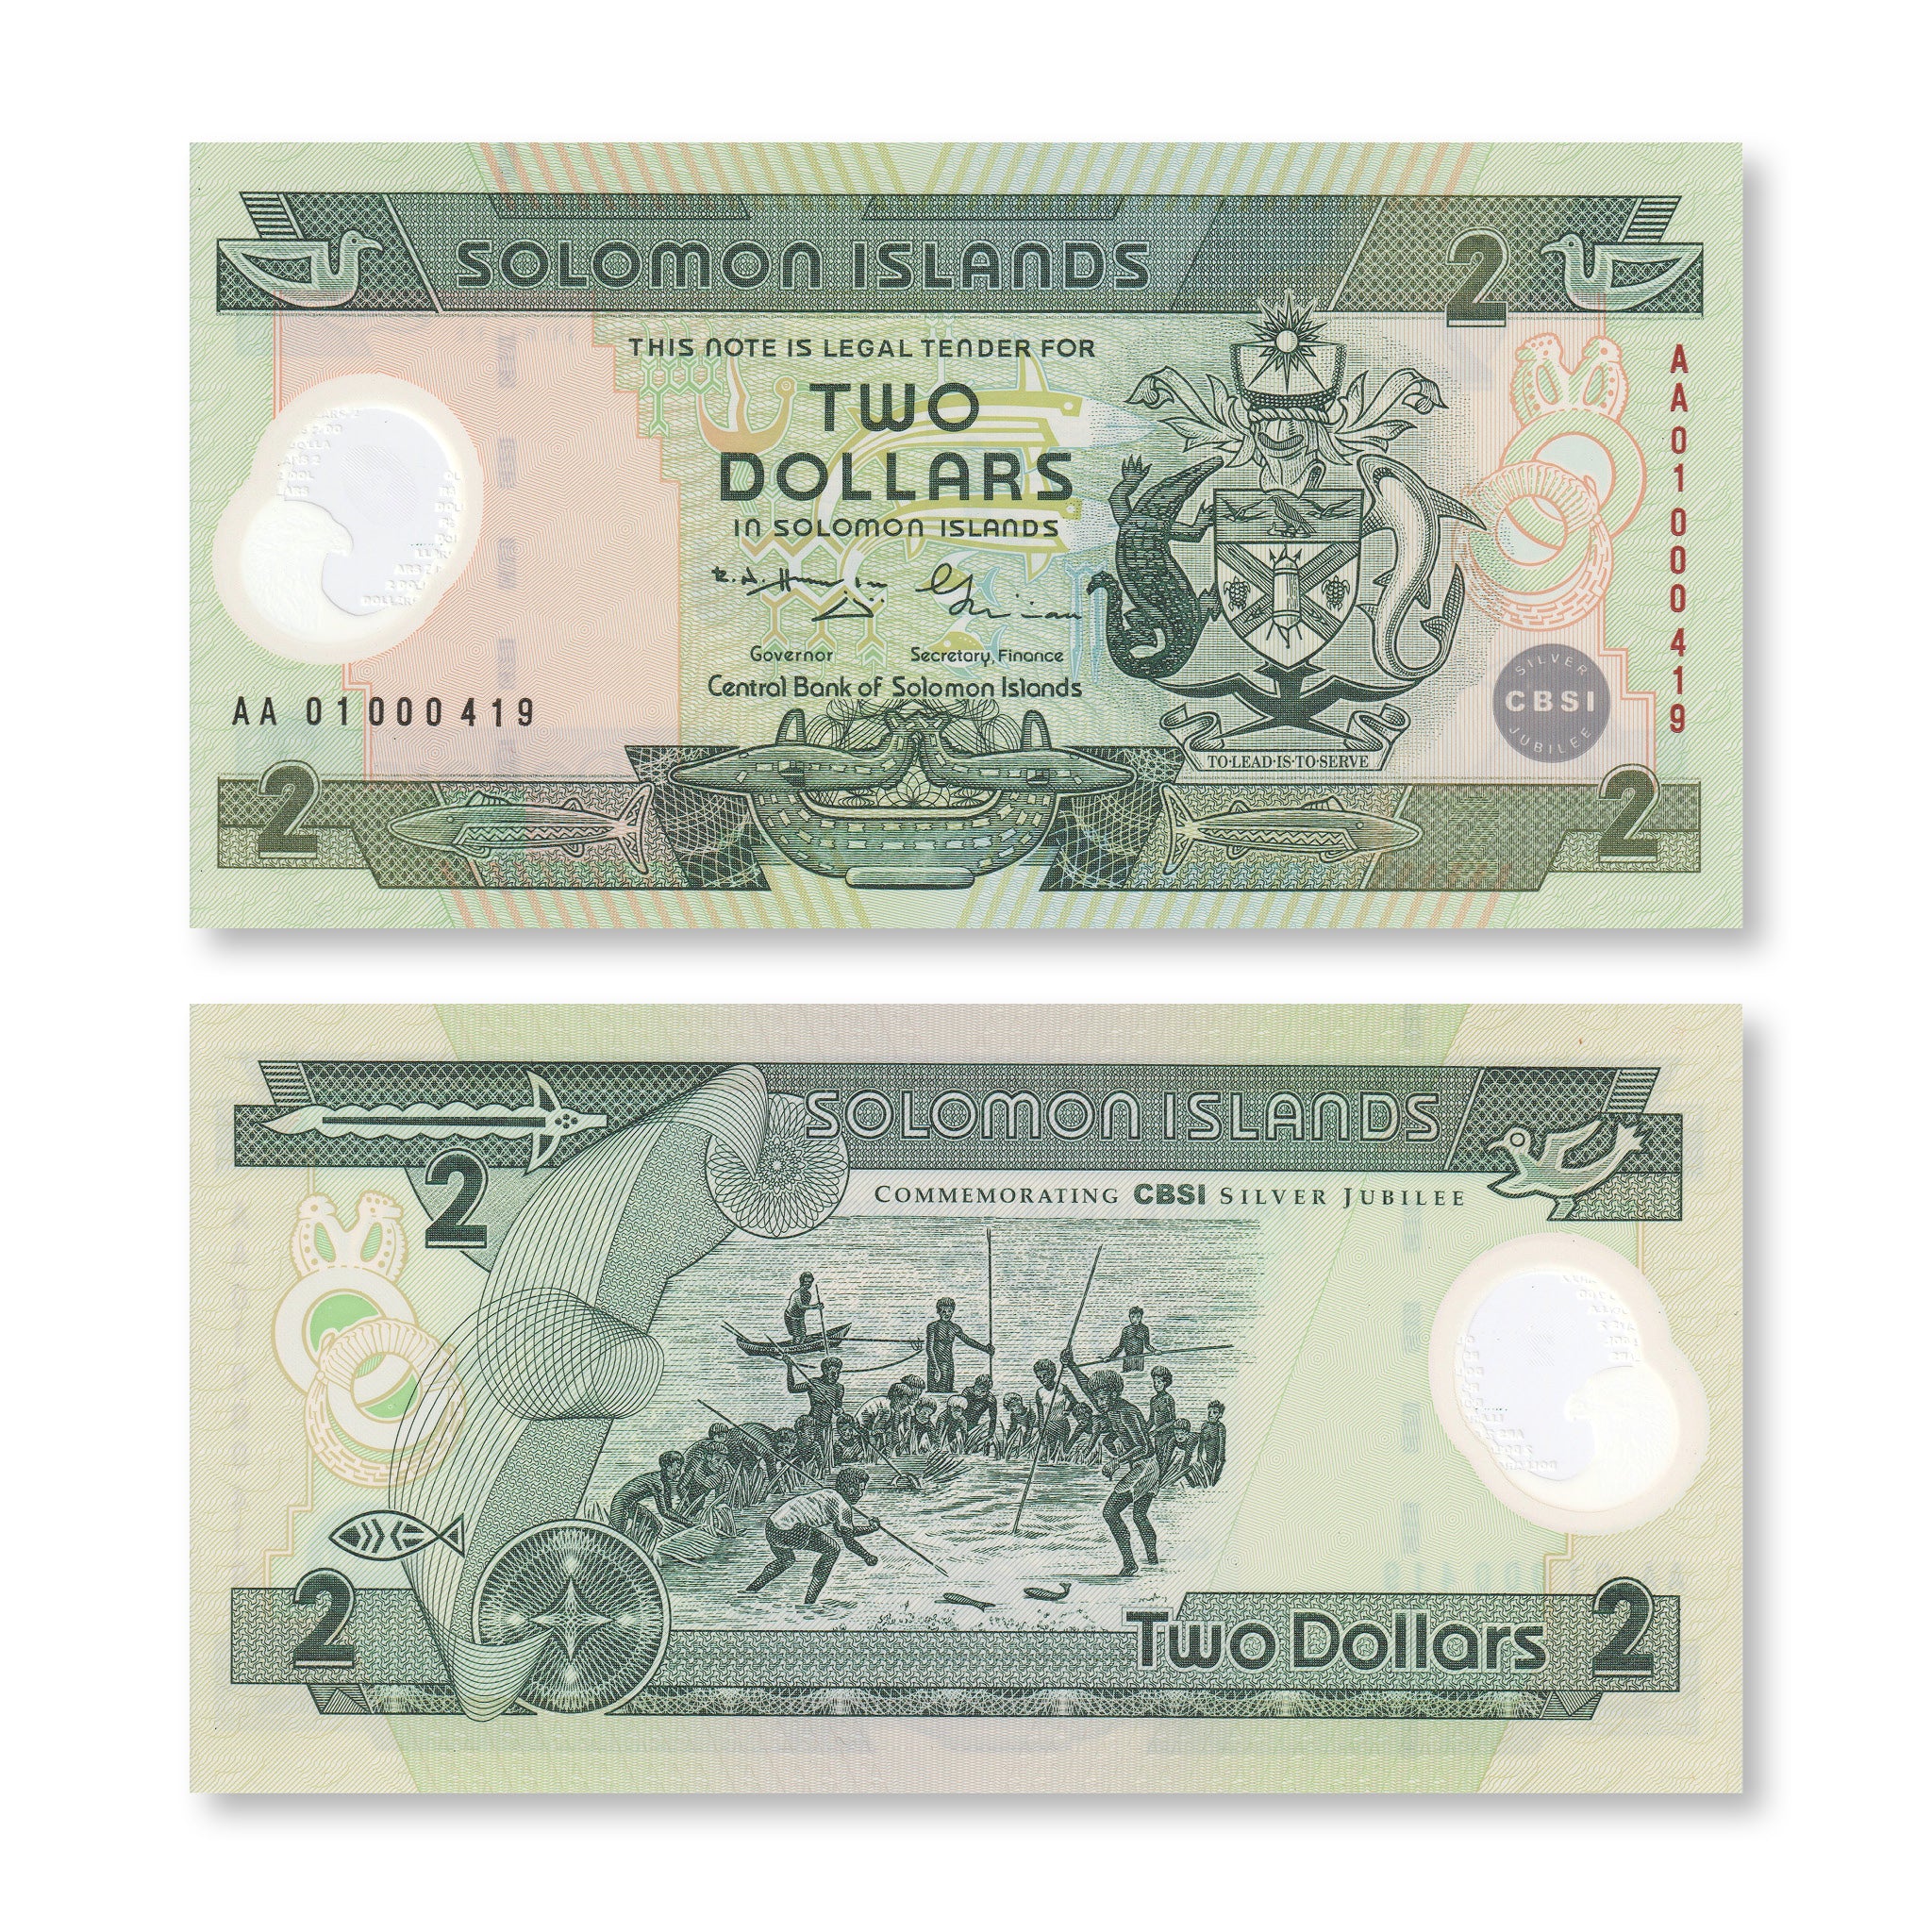 Solomon Islands 2 Dollars, 2001, Commemorative, CBSI Silver Jubilee, B213a, P23, UNC